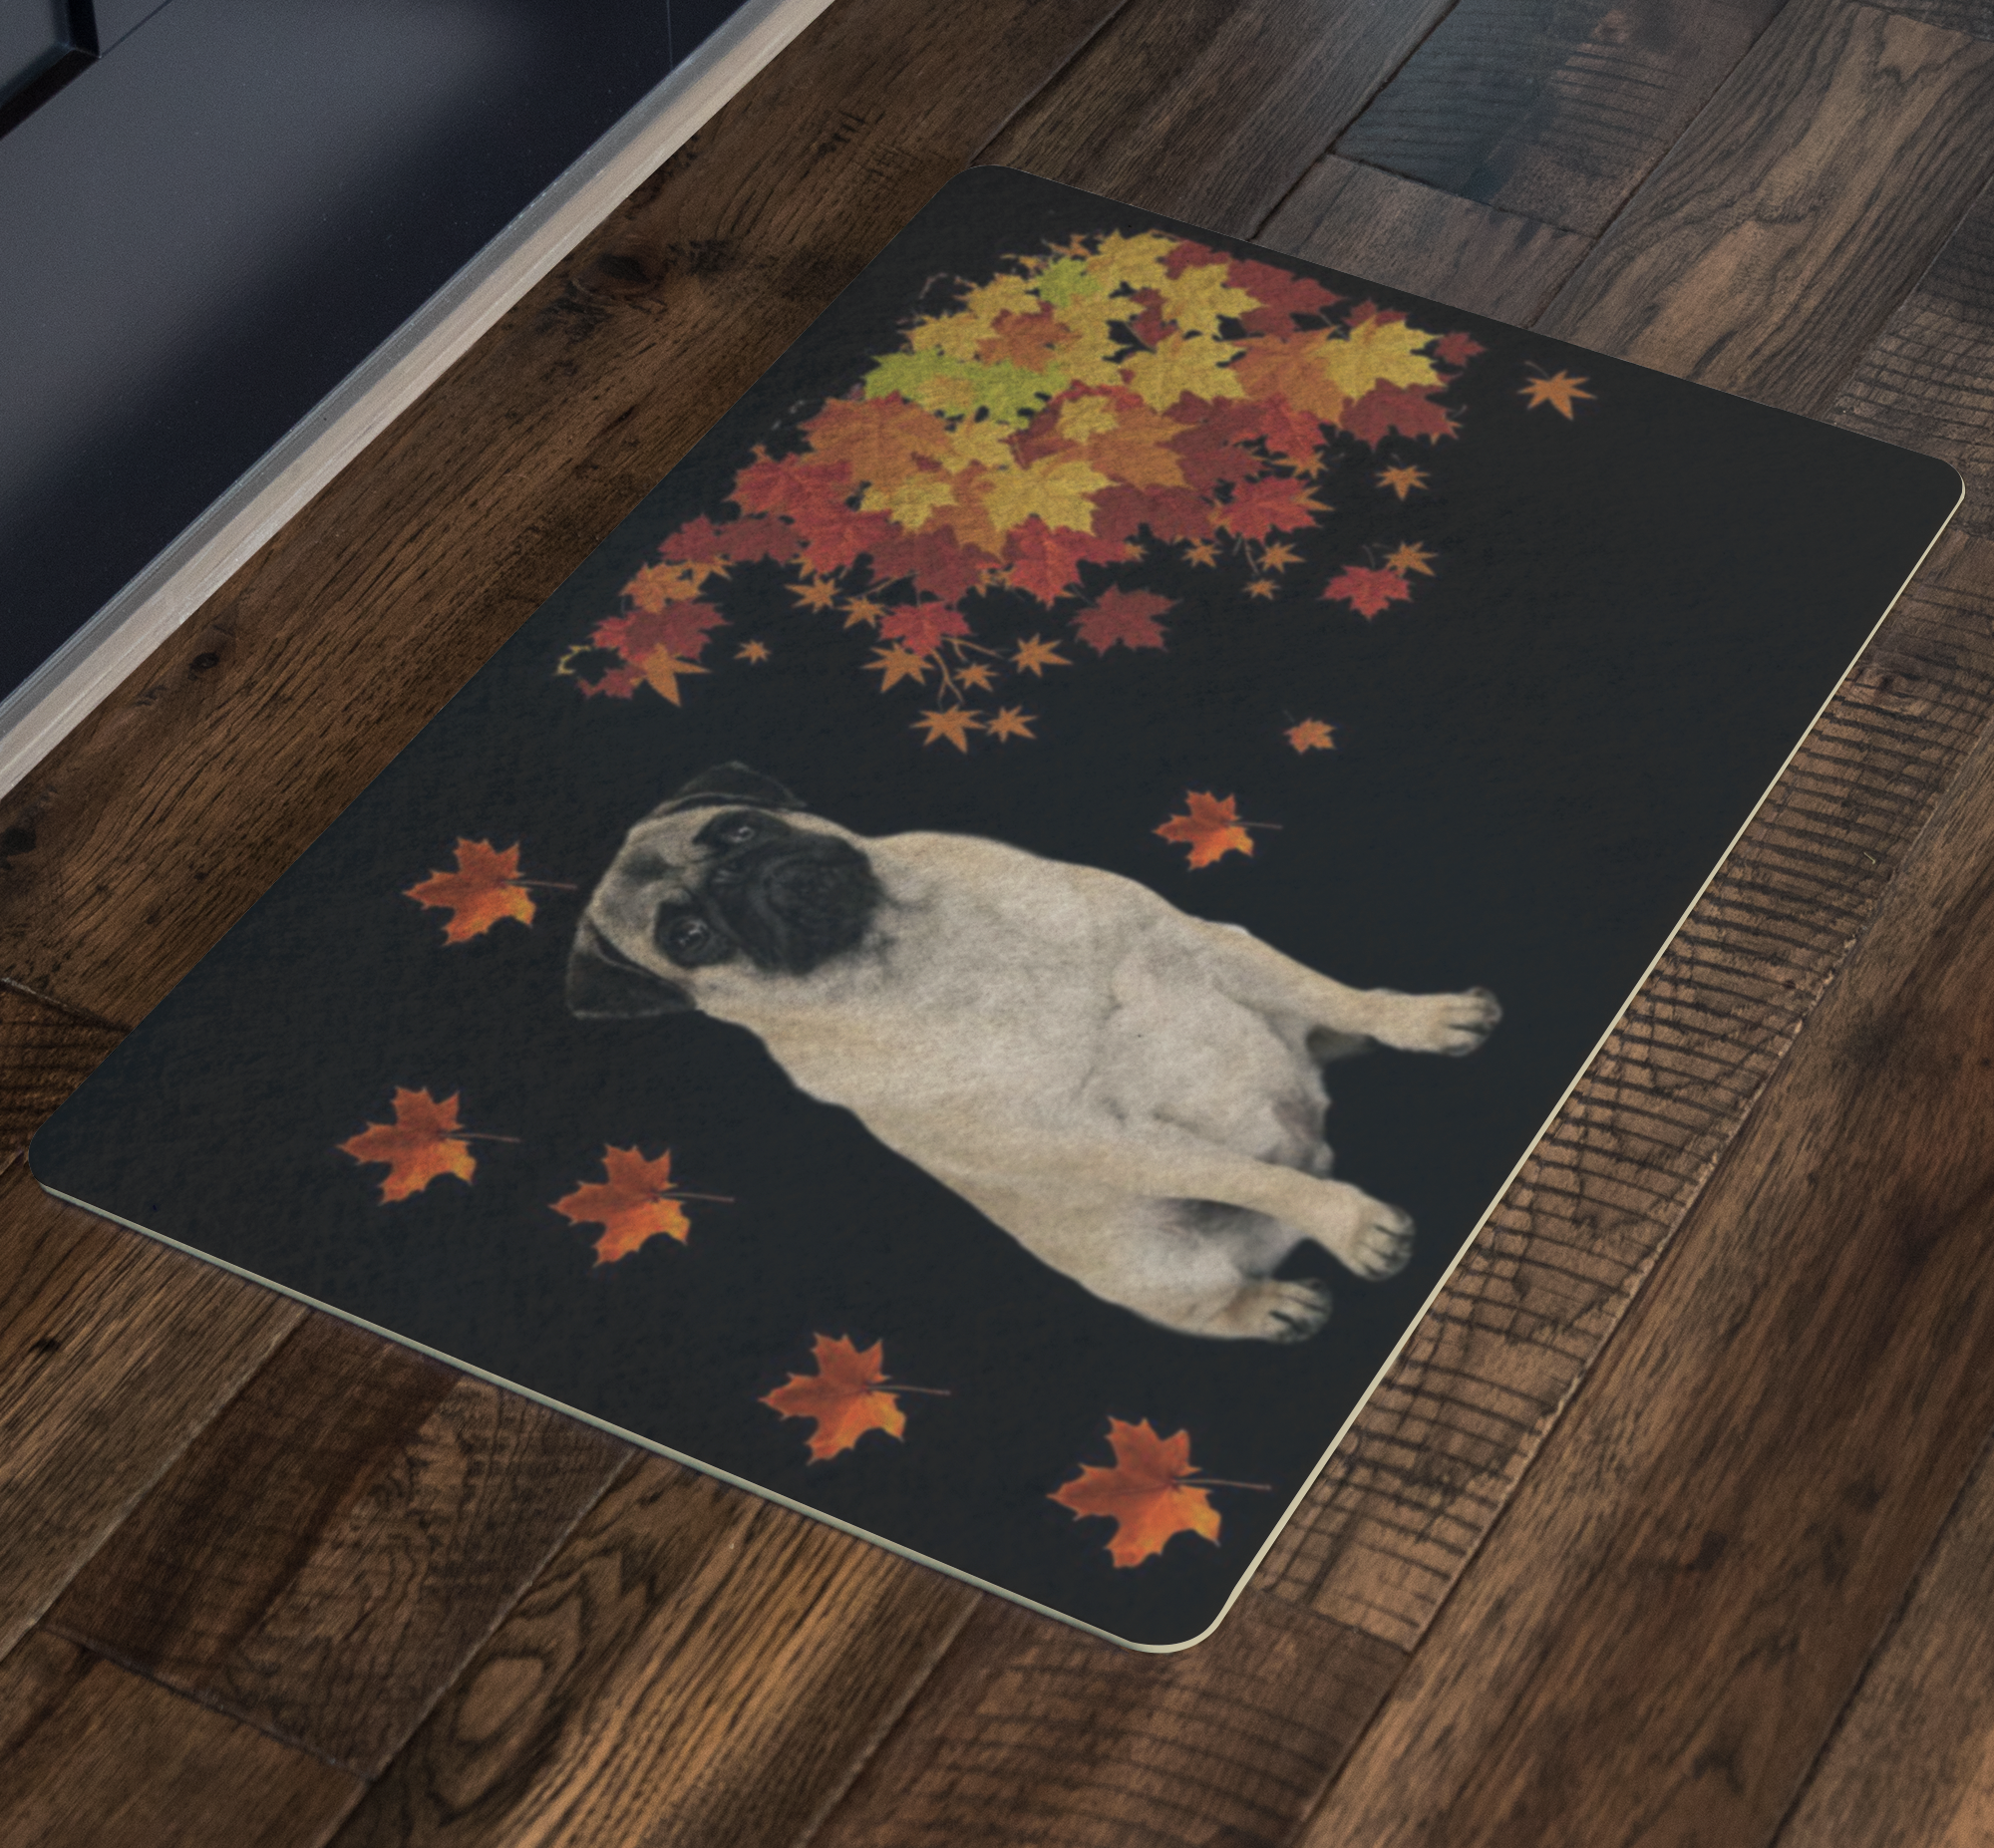 Pug Doormat -Fall